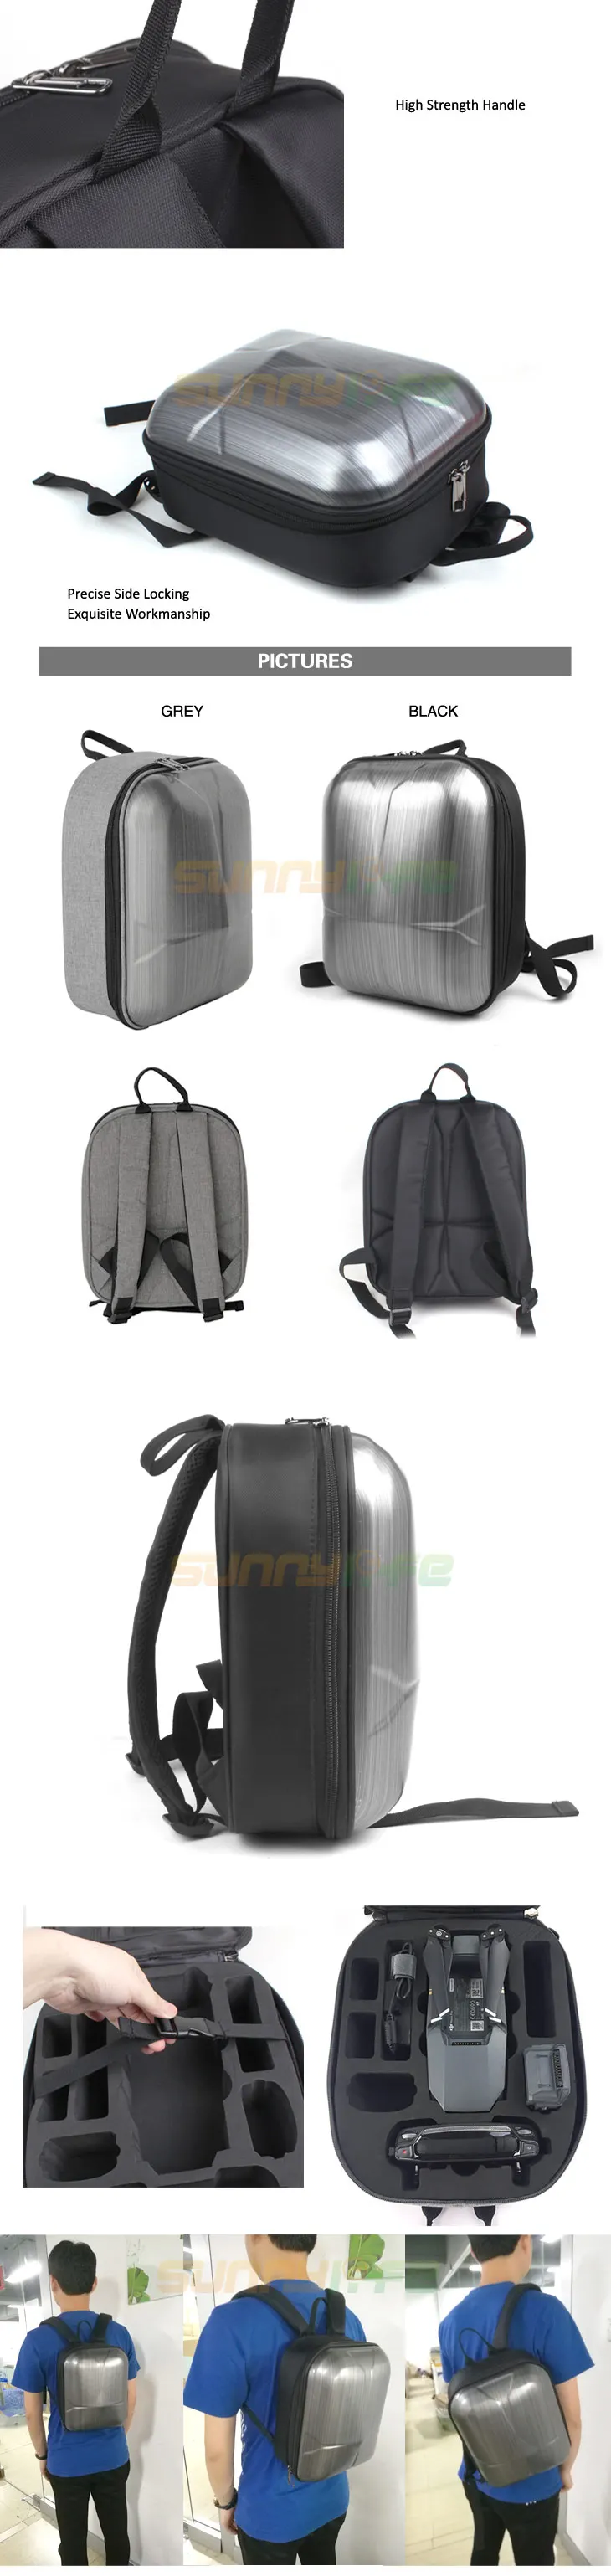 Мини Прочный Рюкзак водонепроницаемая сумка на плечо для DJI Mavic Pro